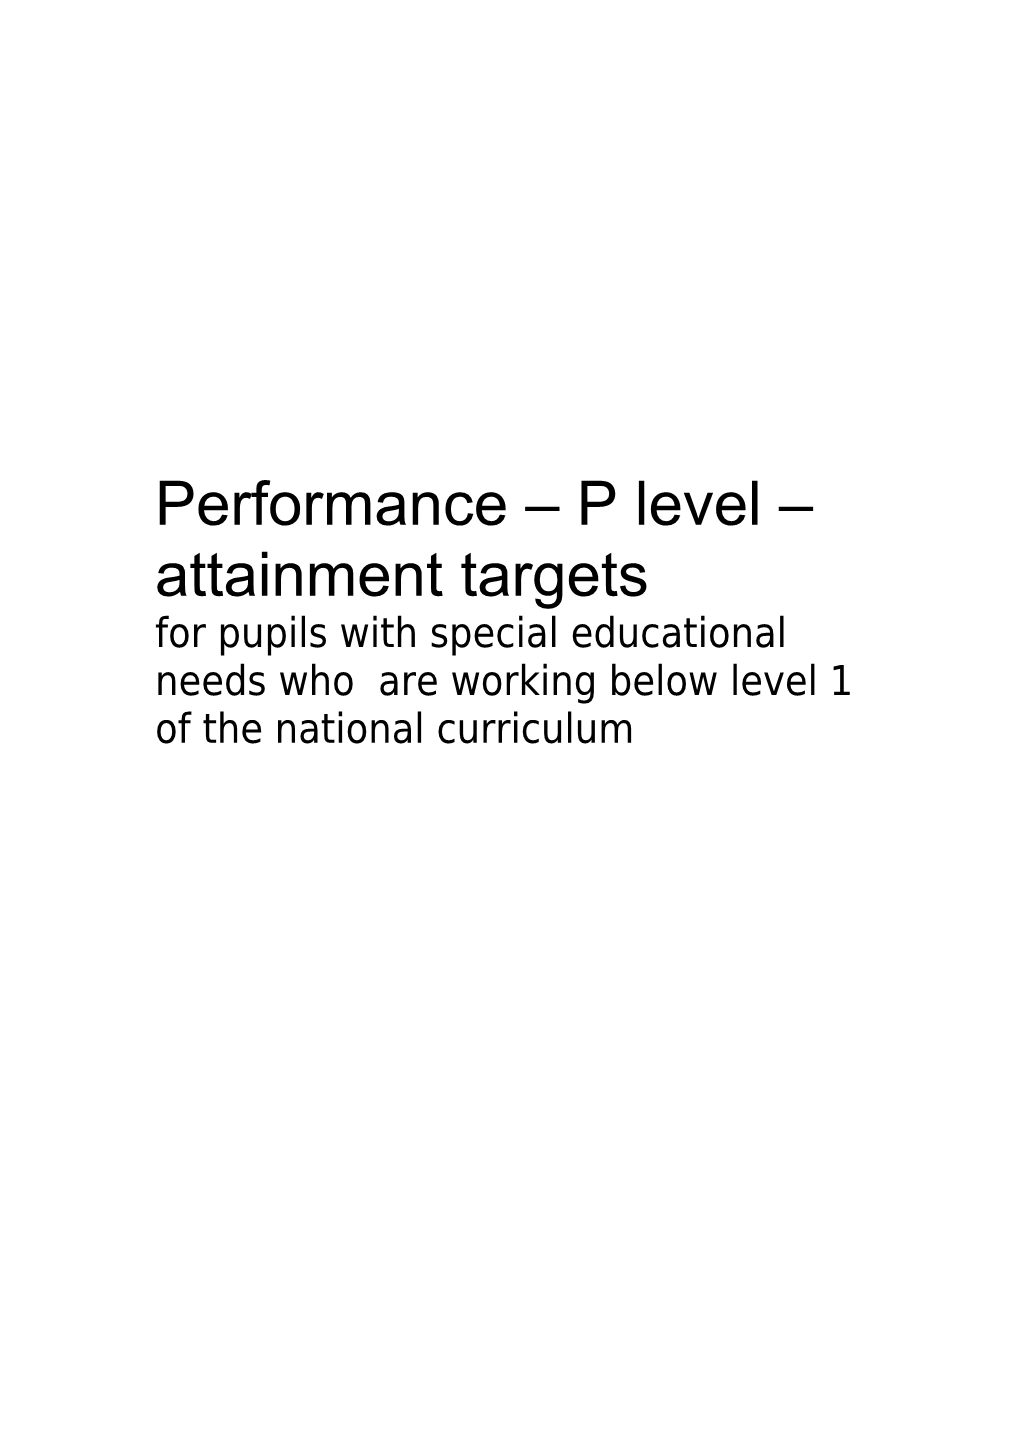 Performance P Level Attainment Targets